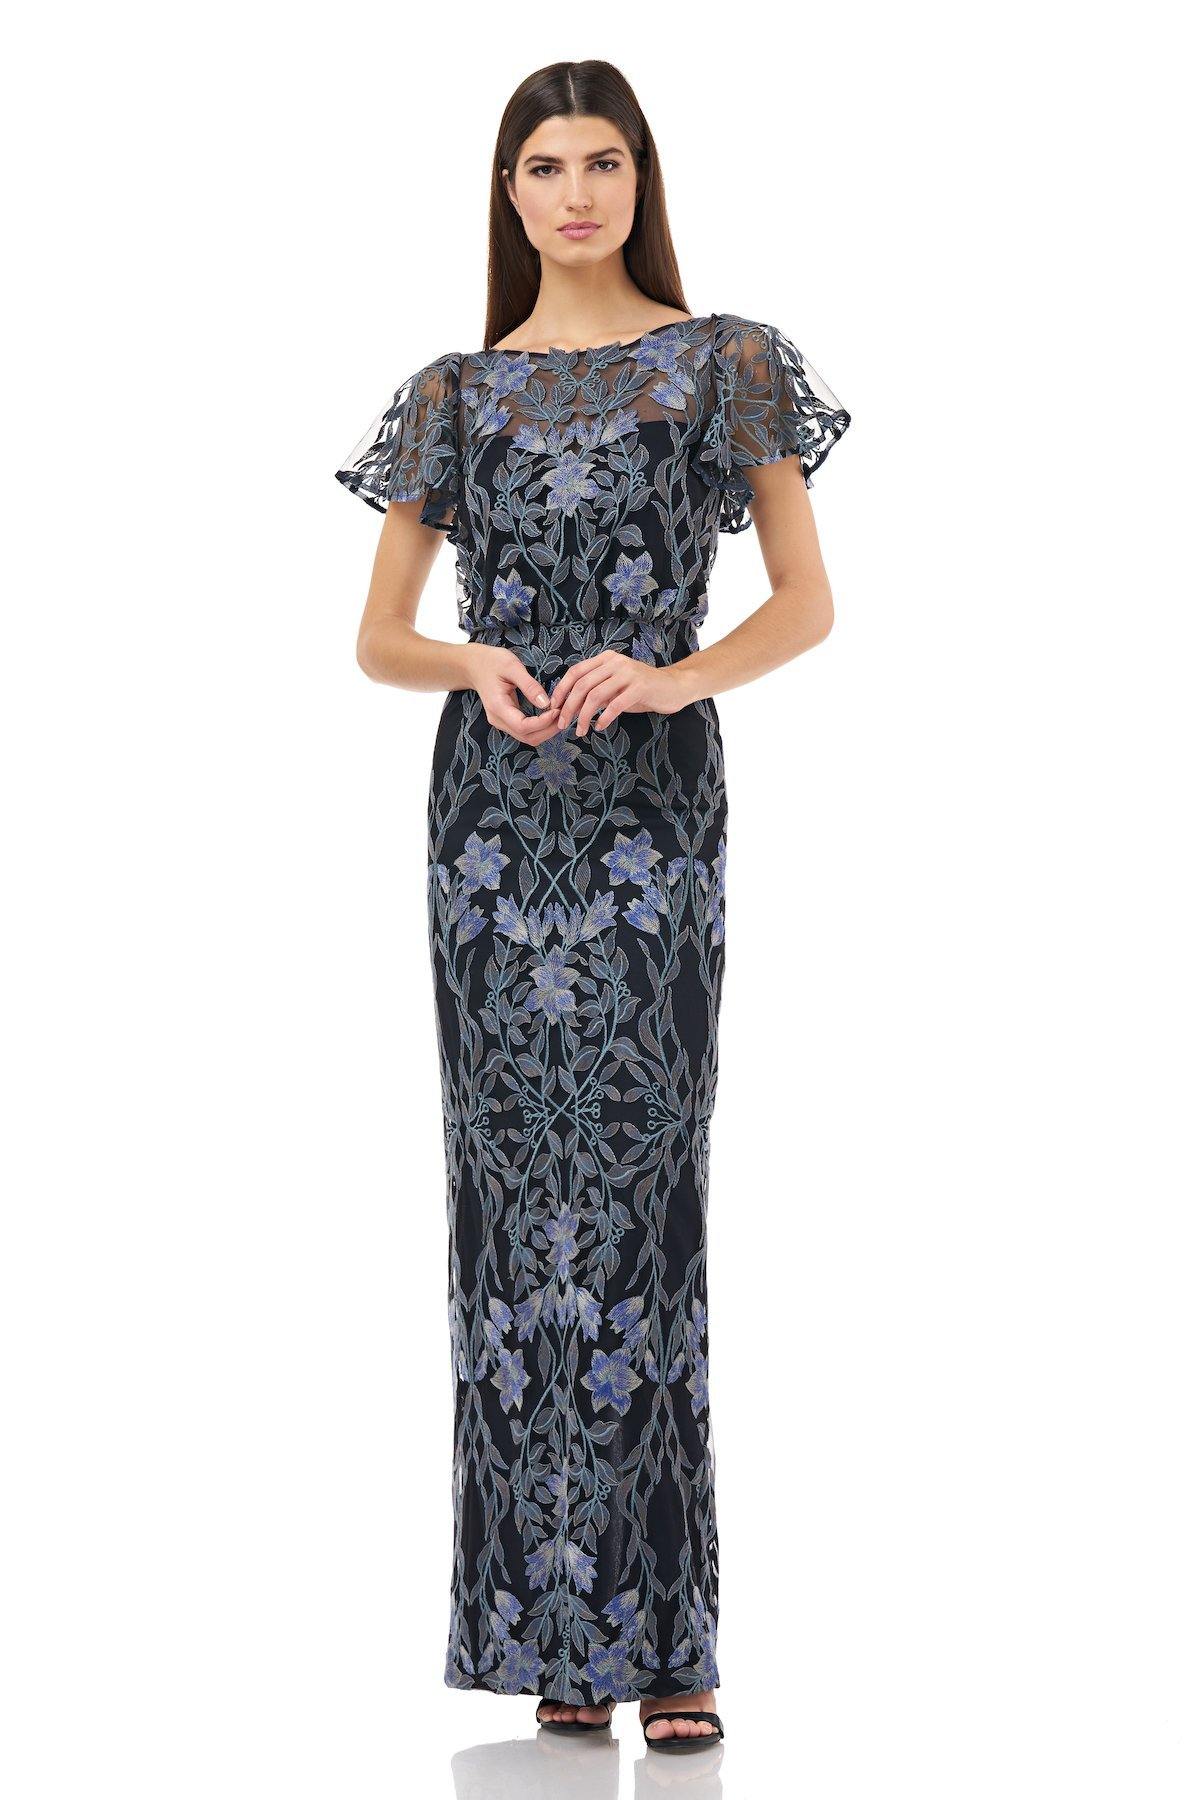 JS Collections Long Formal Blouson Mesh Dress 866961 - The Dress Outlet